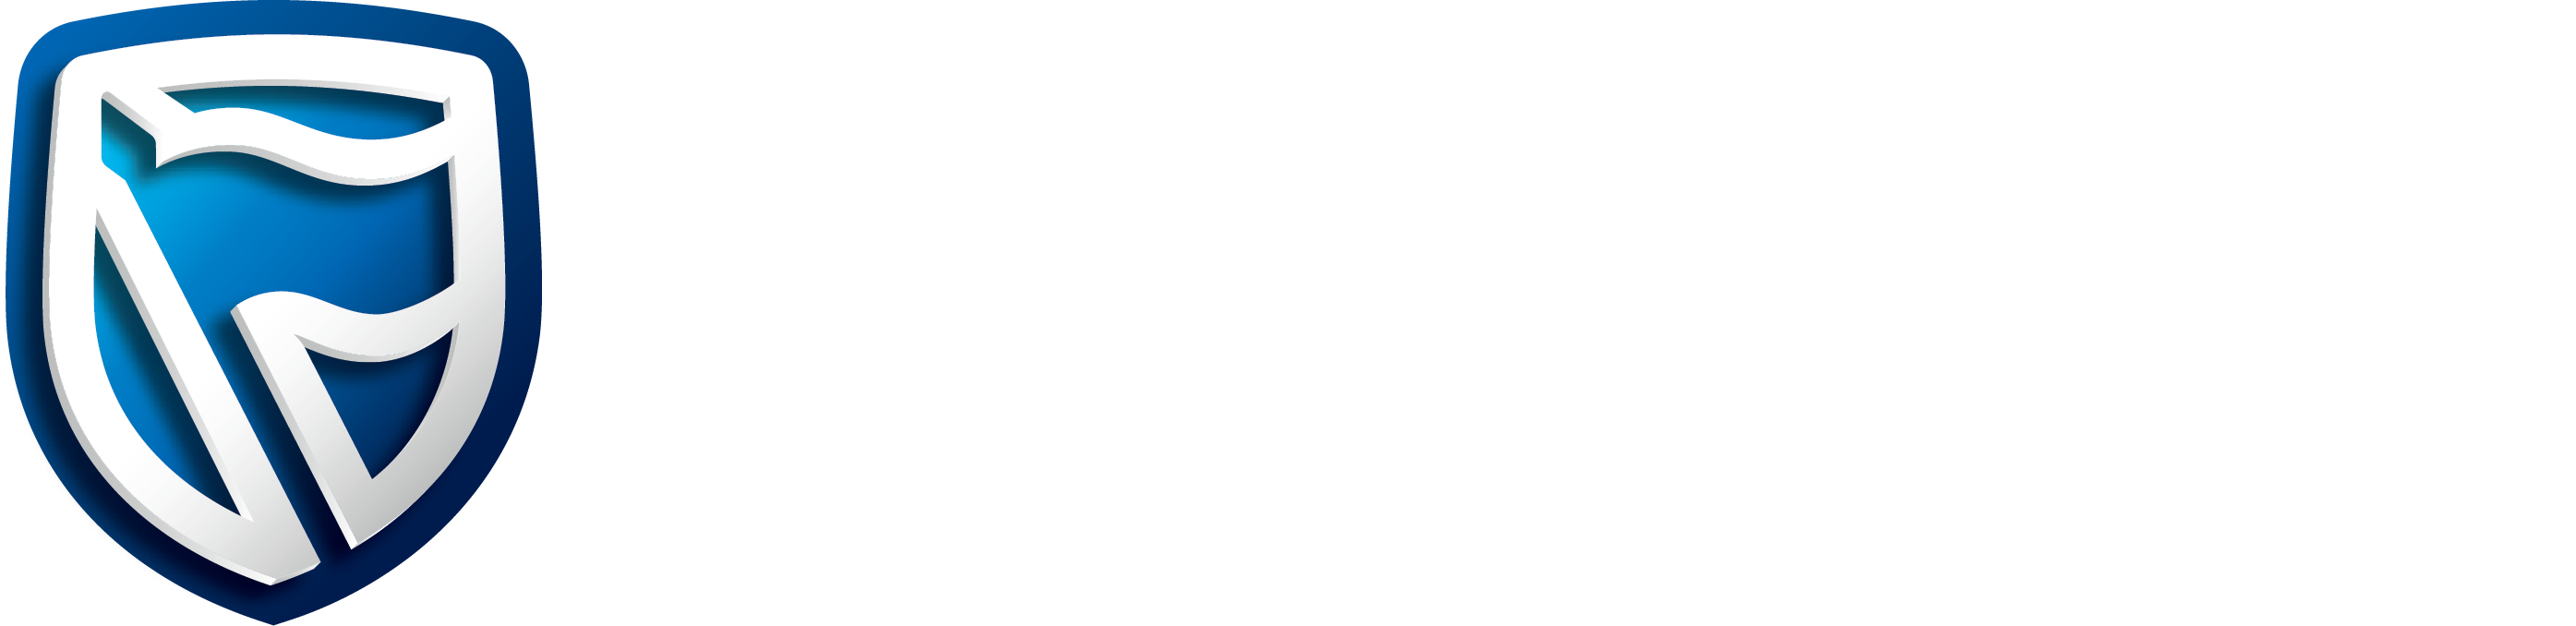 Stanbic logo